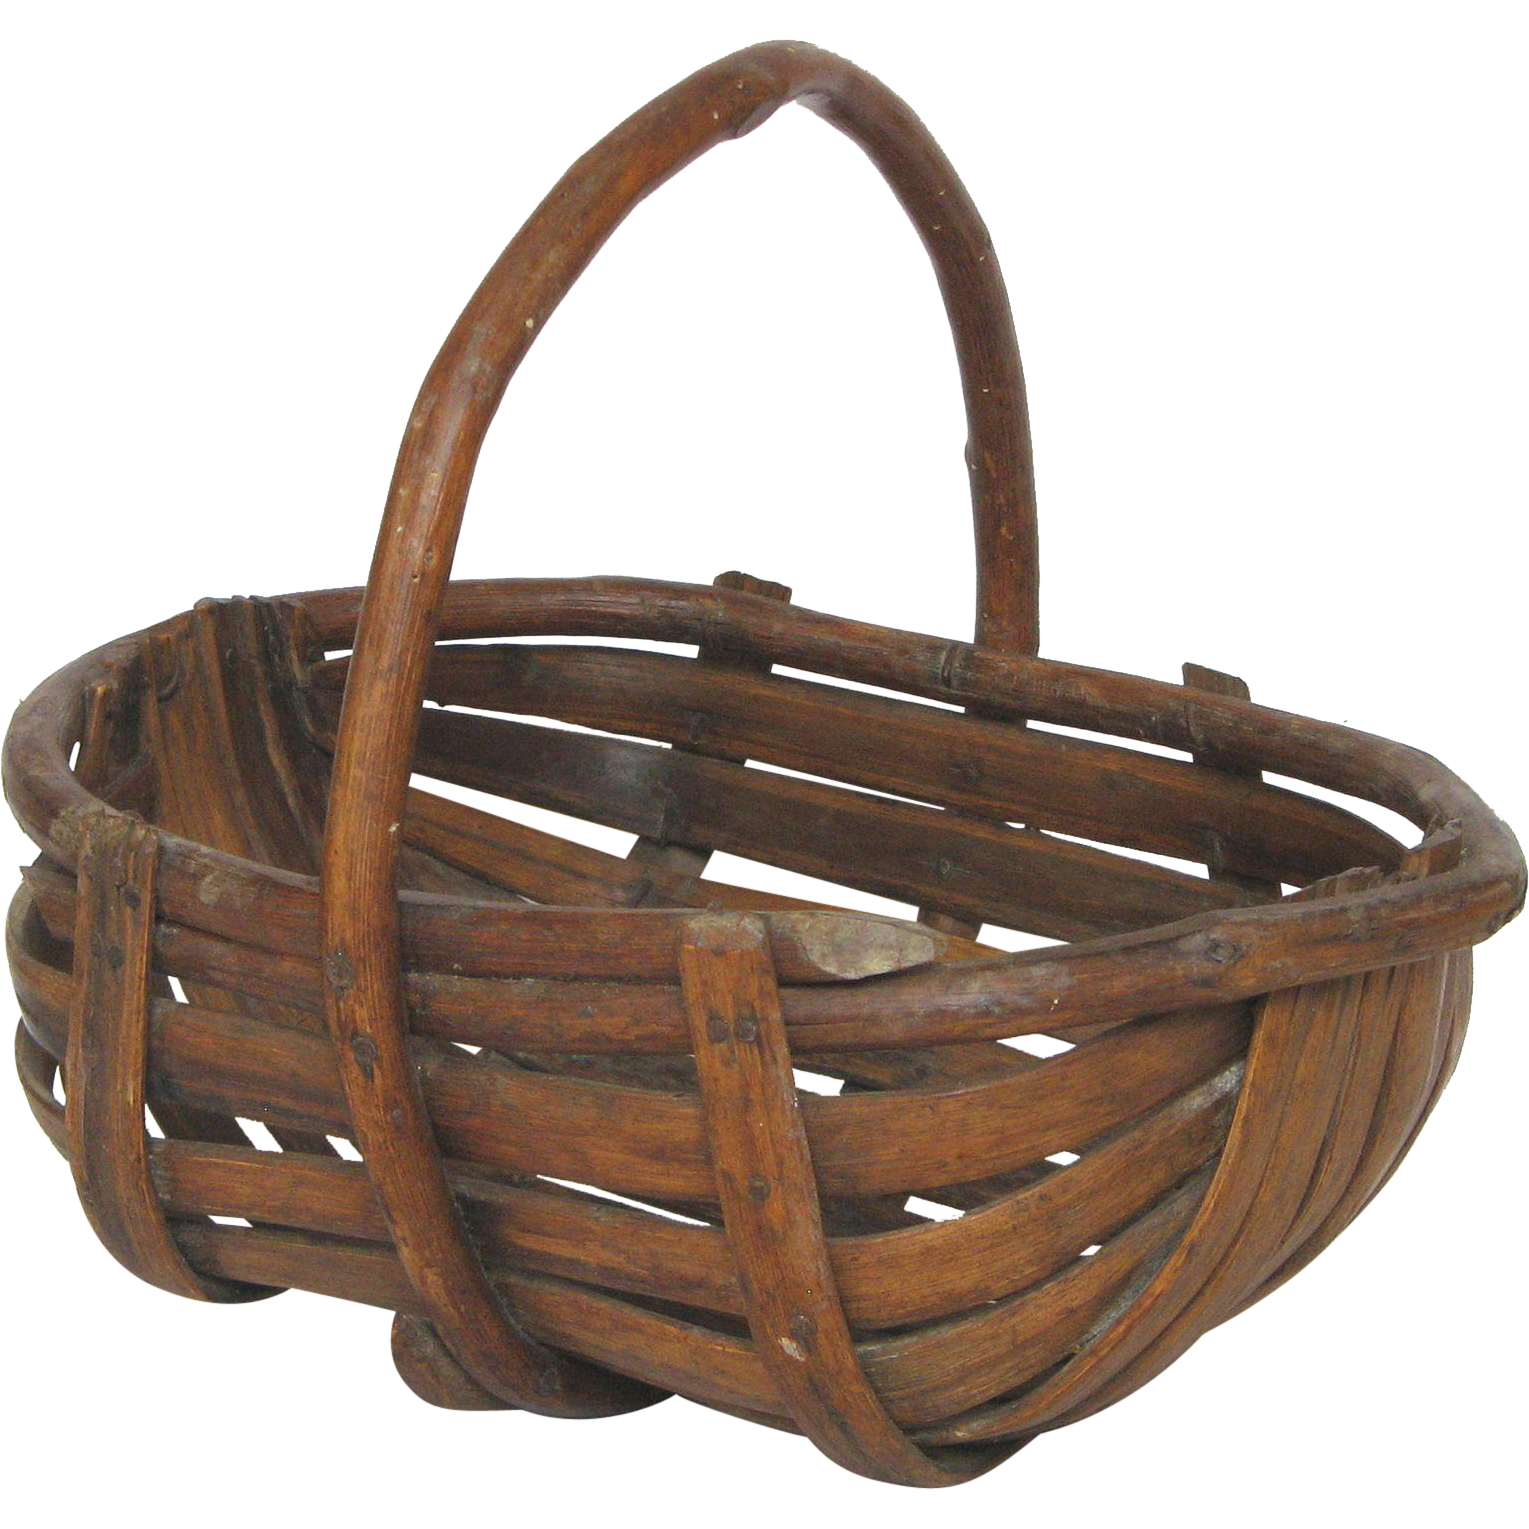 Vintage French Wooden Slatted Gathering Basket - Garden Panier ...